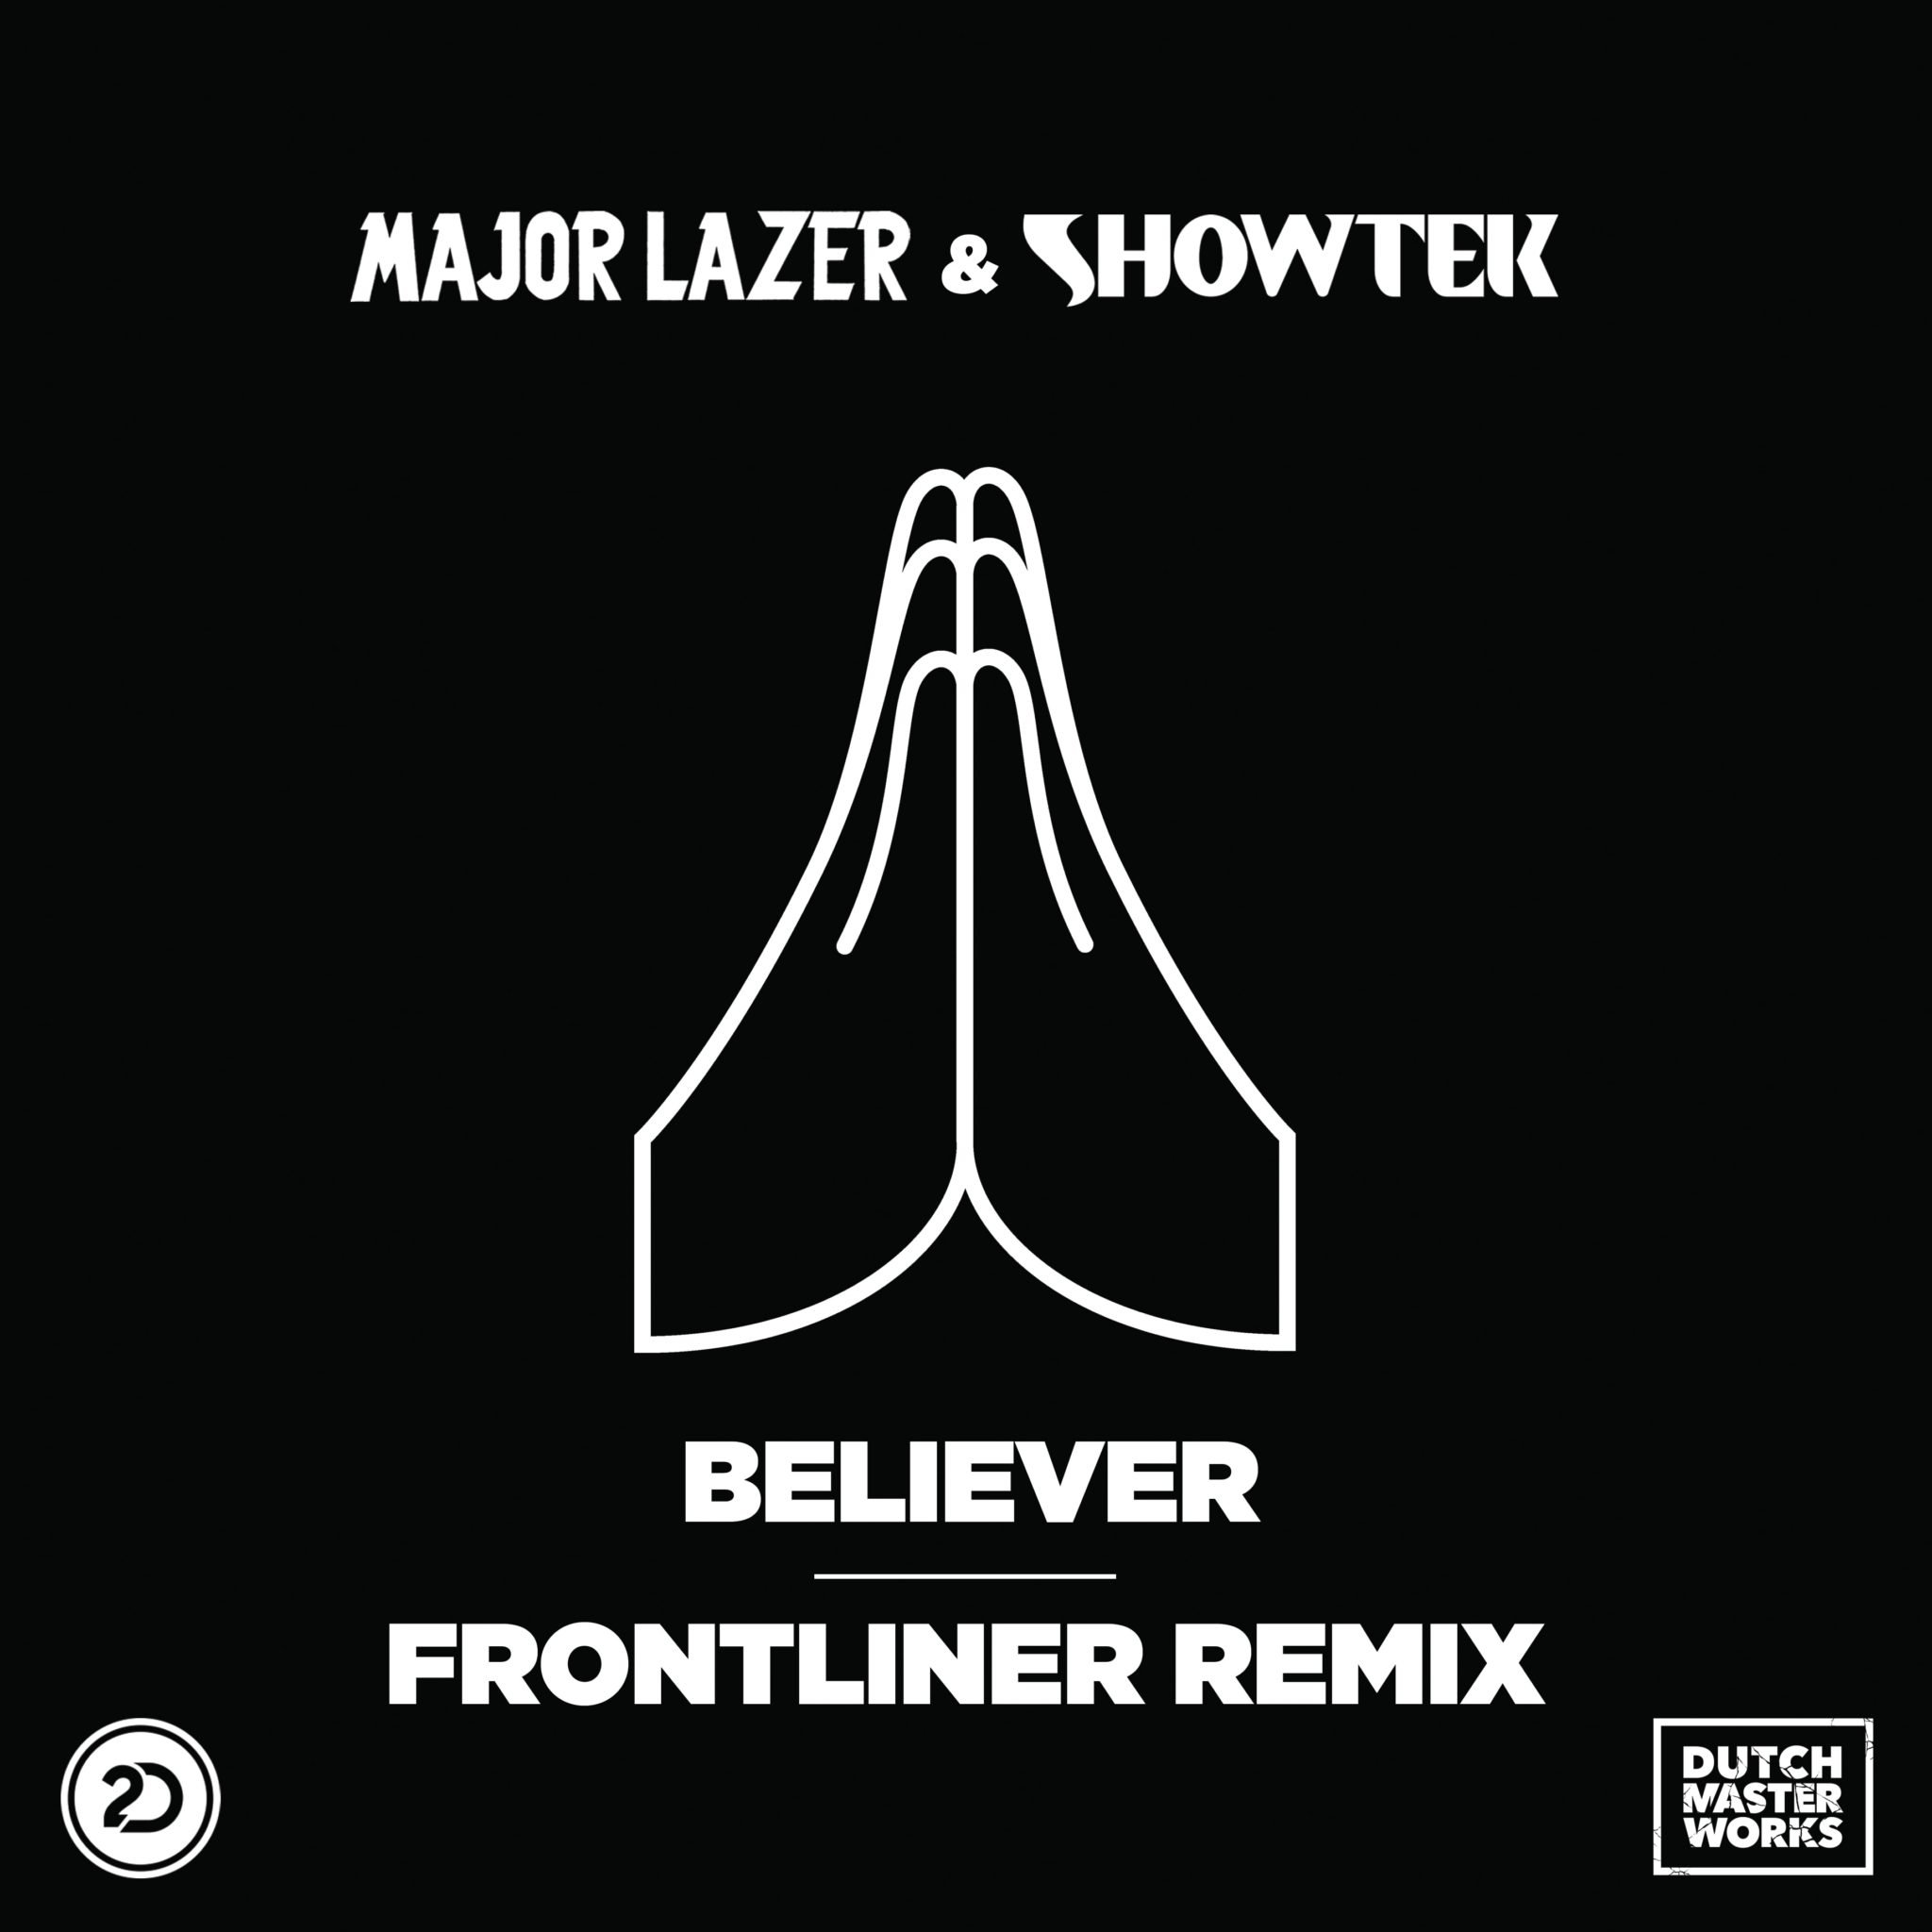 Major lazer remix. Major Lazer Believer. Showtek Believer. Believer Remix. Major Lazer logo.